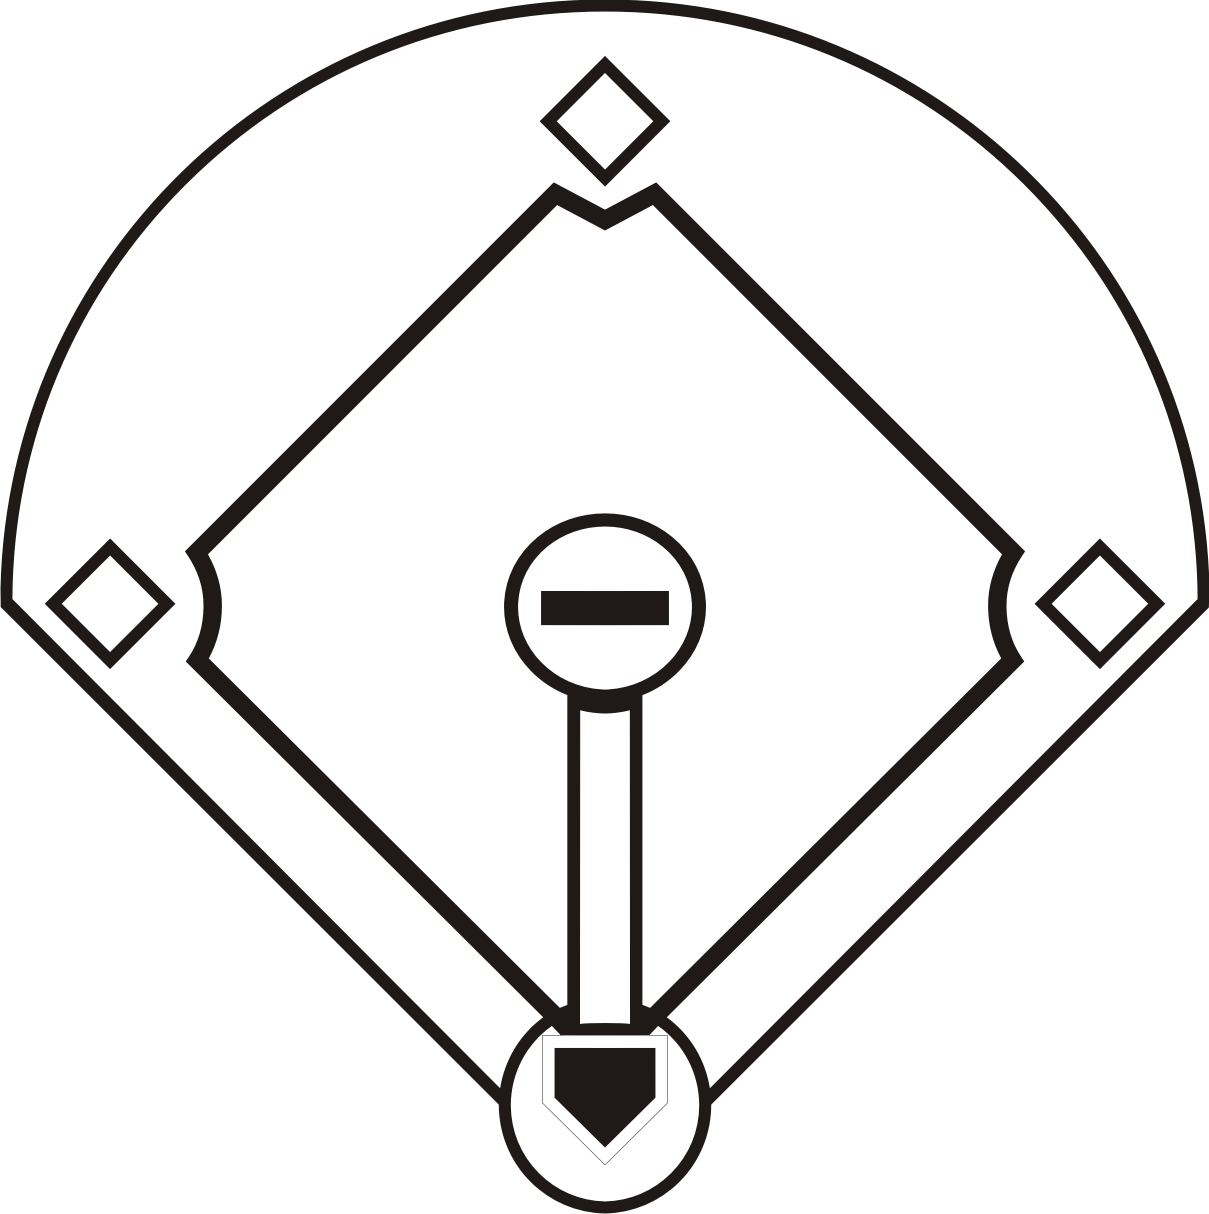 Black and white baseball diamond clip art